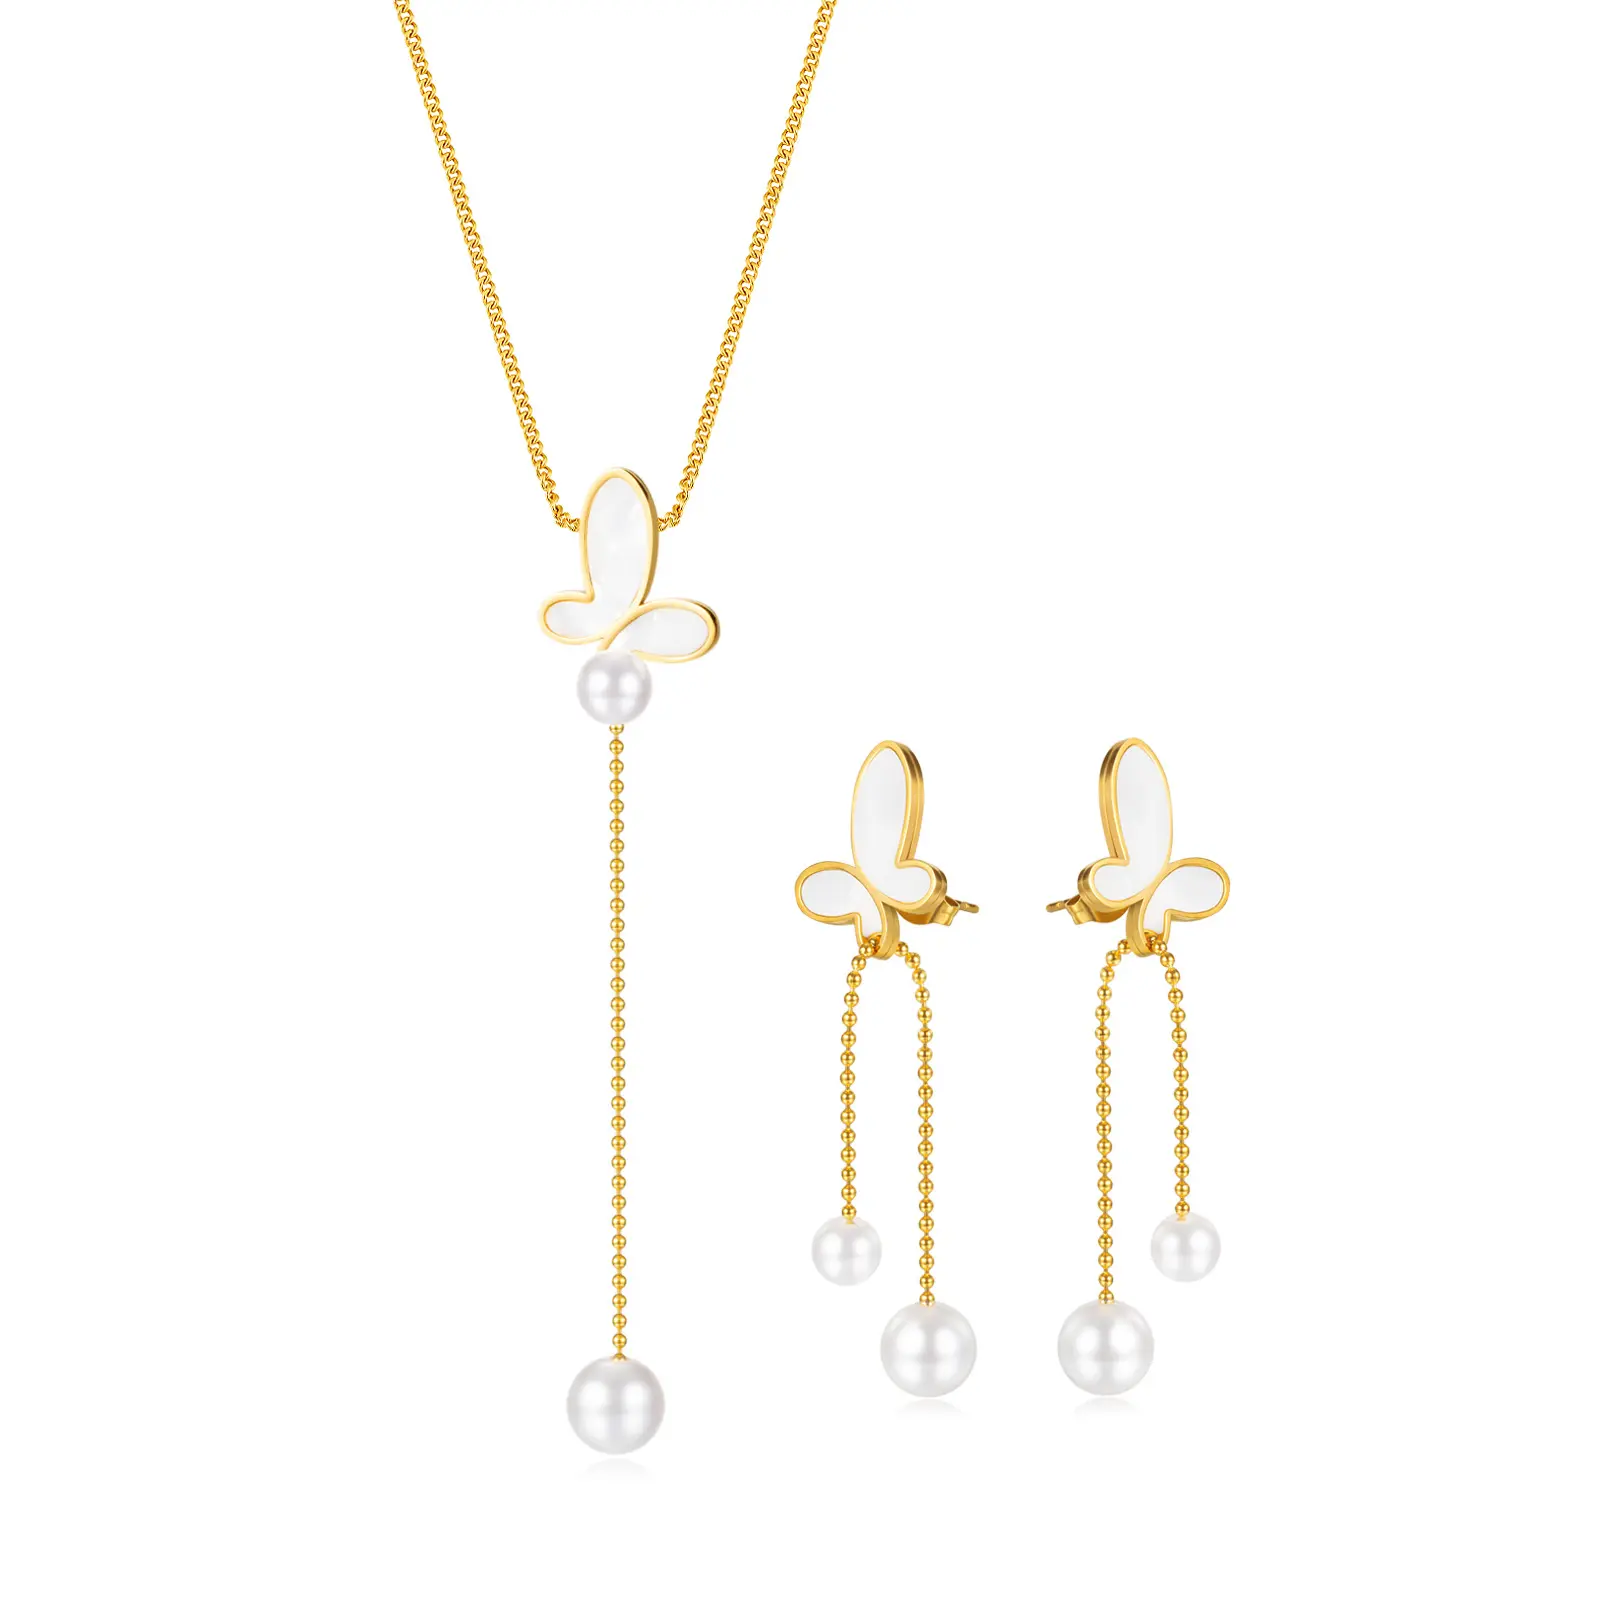 Tarnish Free Stainless Steel Shell Butterfly Necklace Earring Set 18K Gold Butterfly Tassel Pendant Jewelry Set Wholesale